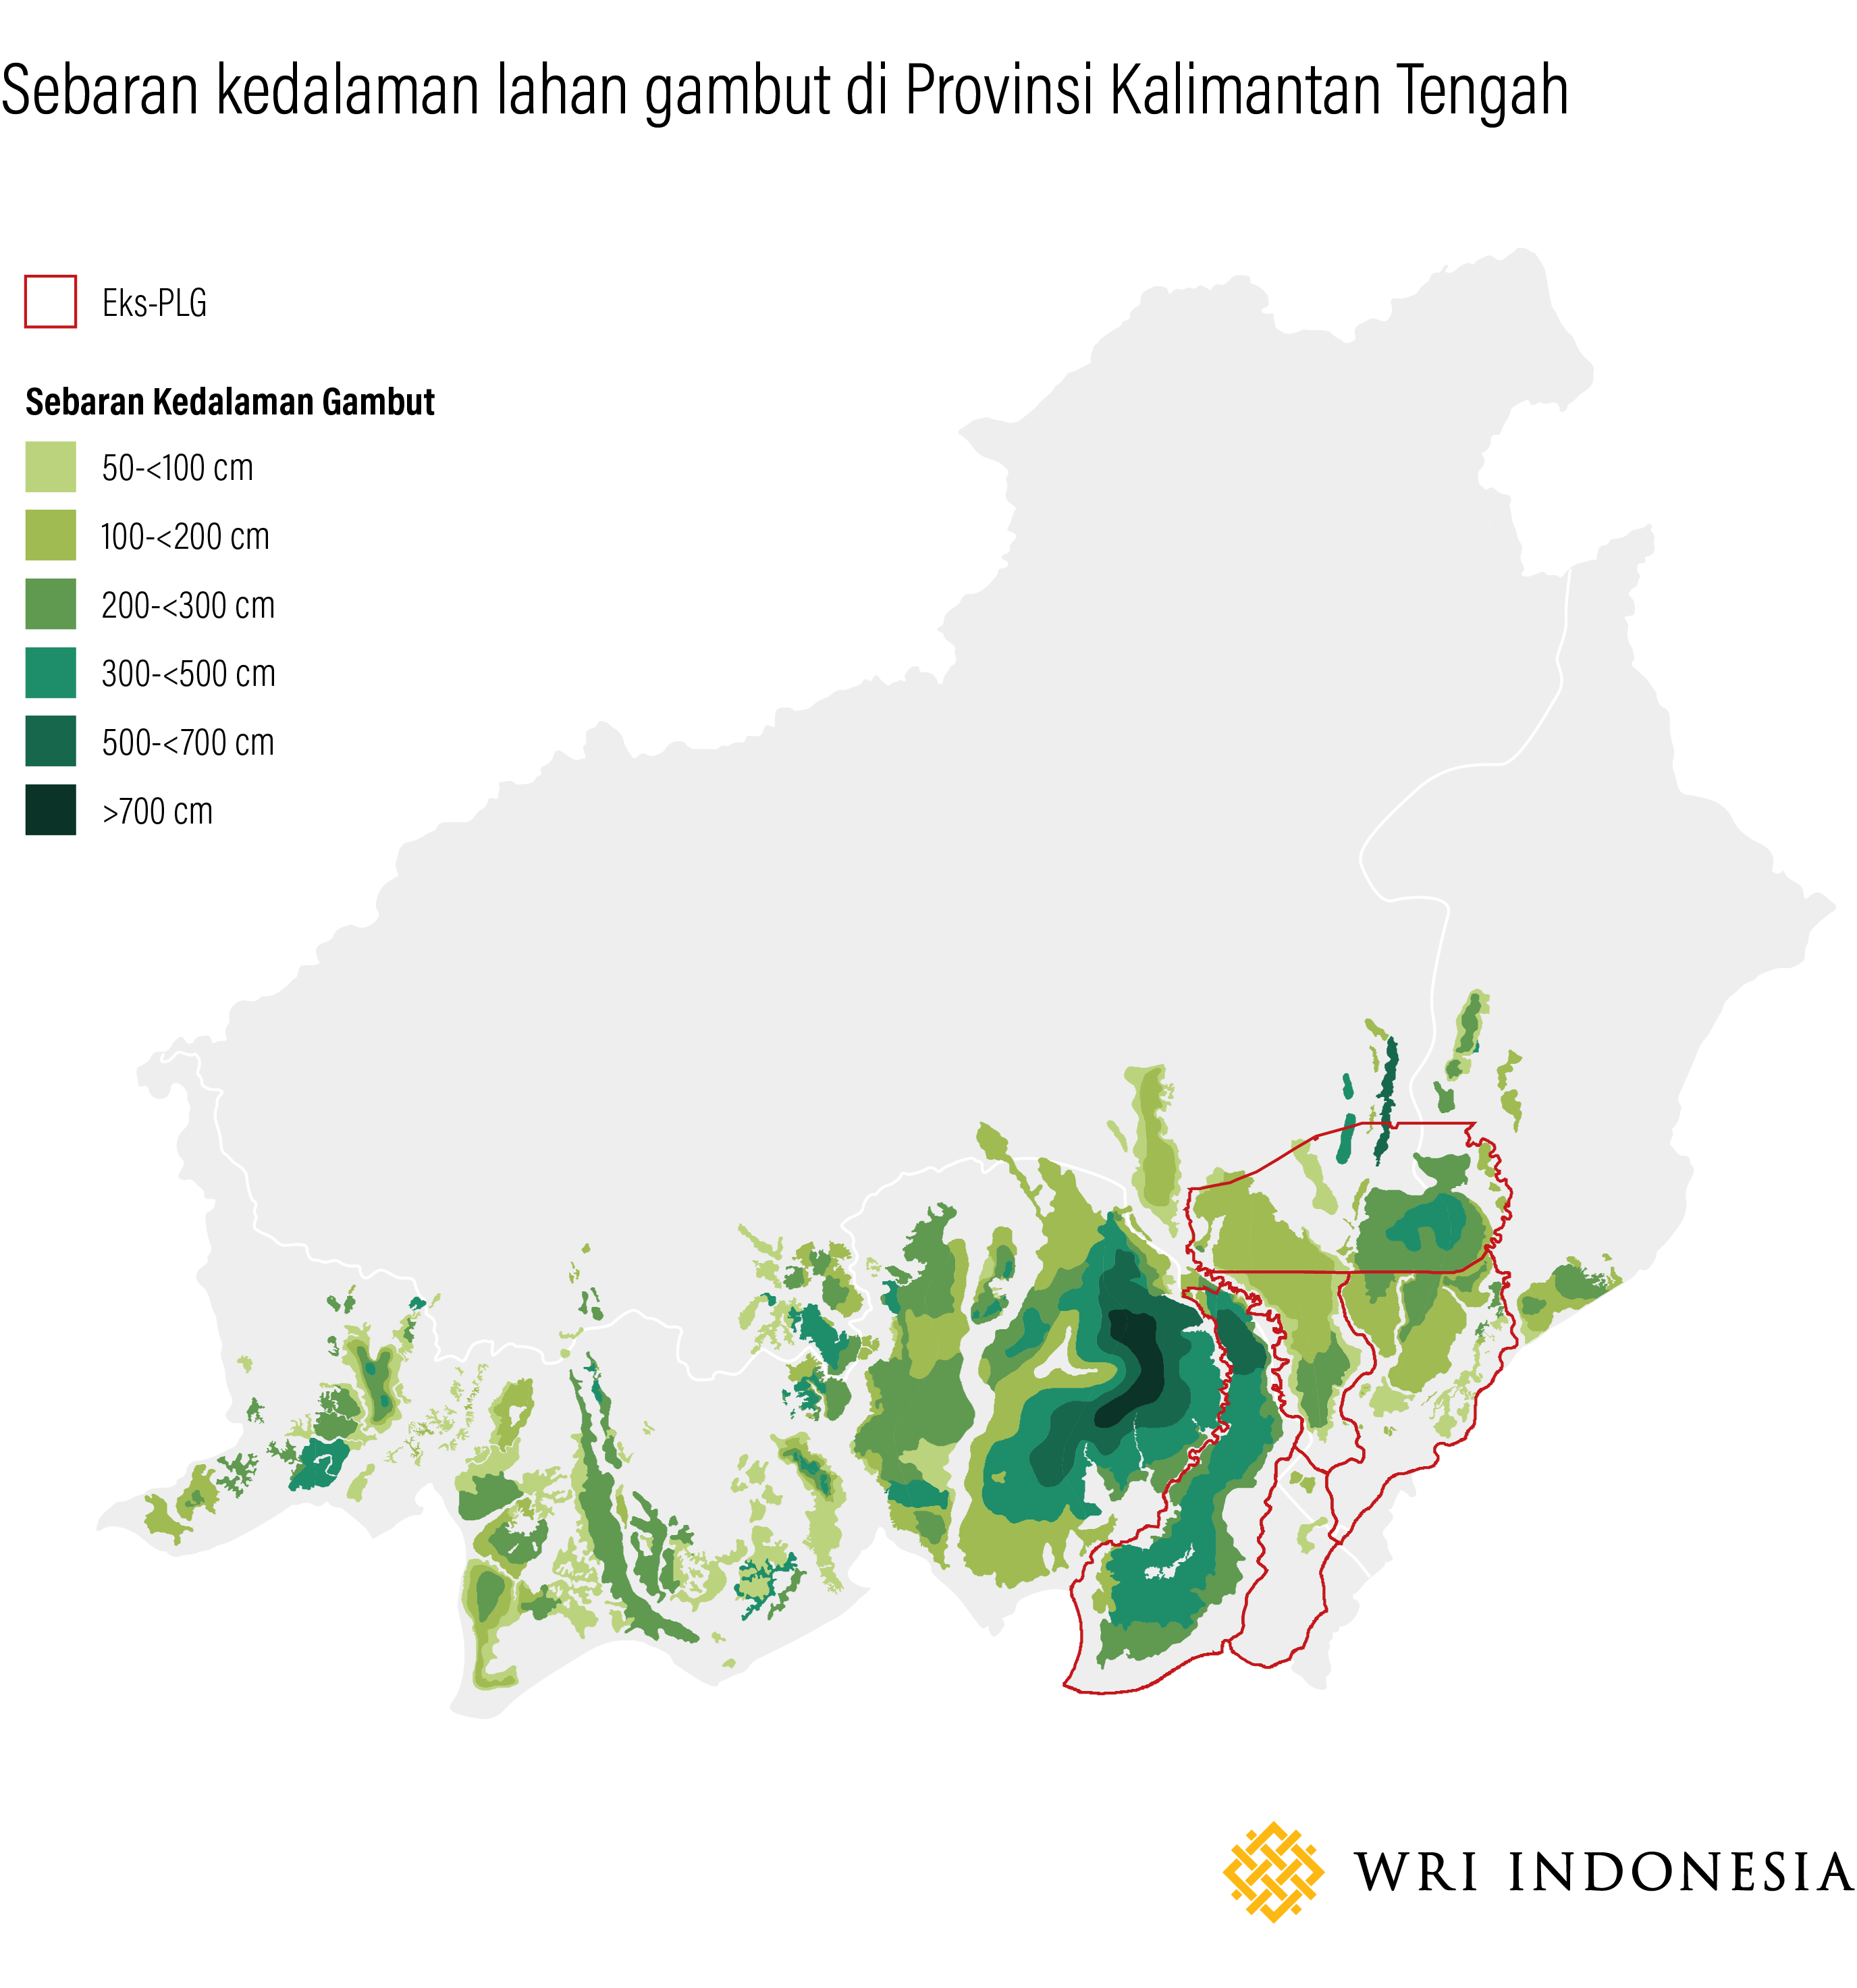 Sebaran kedalaman lahan gambut di Provinsi Kalimantan Tengah. Sumber: Balai Besar Sumber Daya Lahan Pertanian (BBSDLP, 2019)